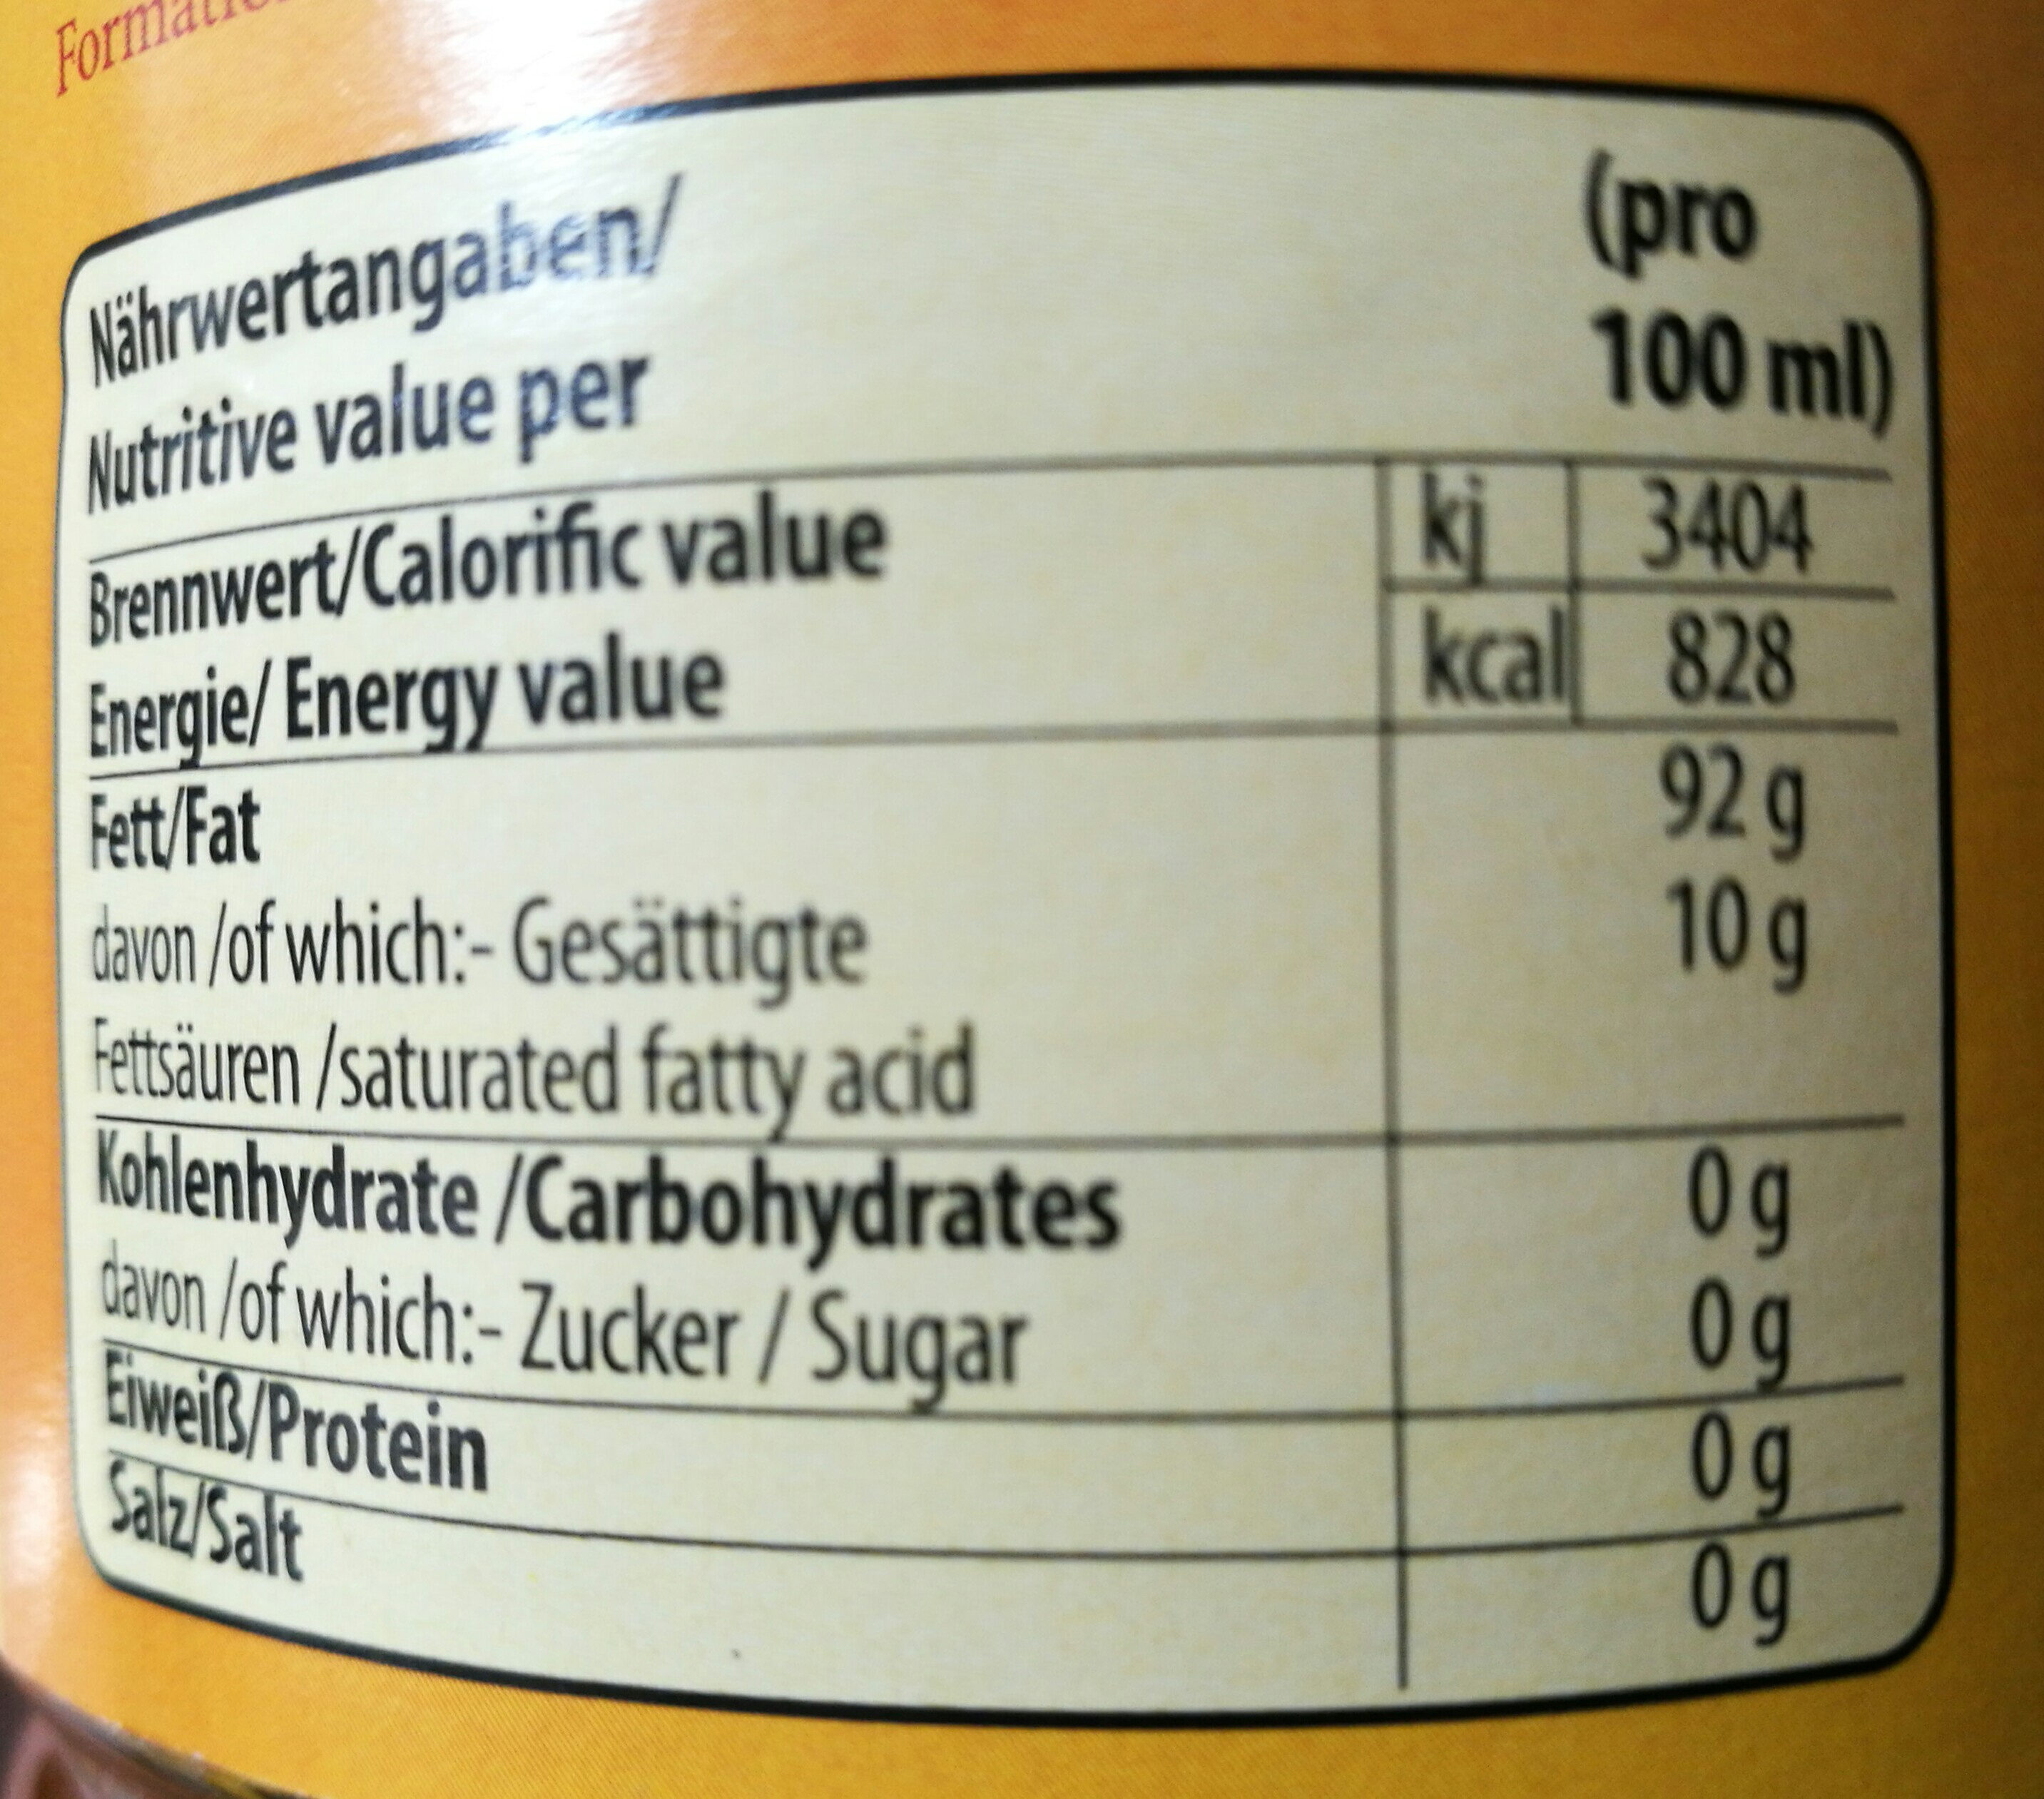 Unrefined sunflower oil - Nutrition facts